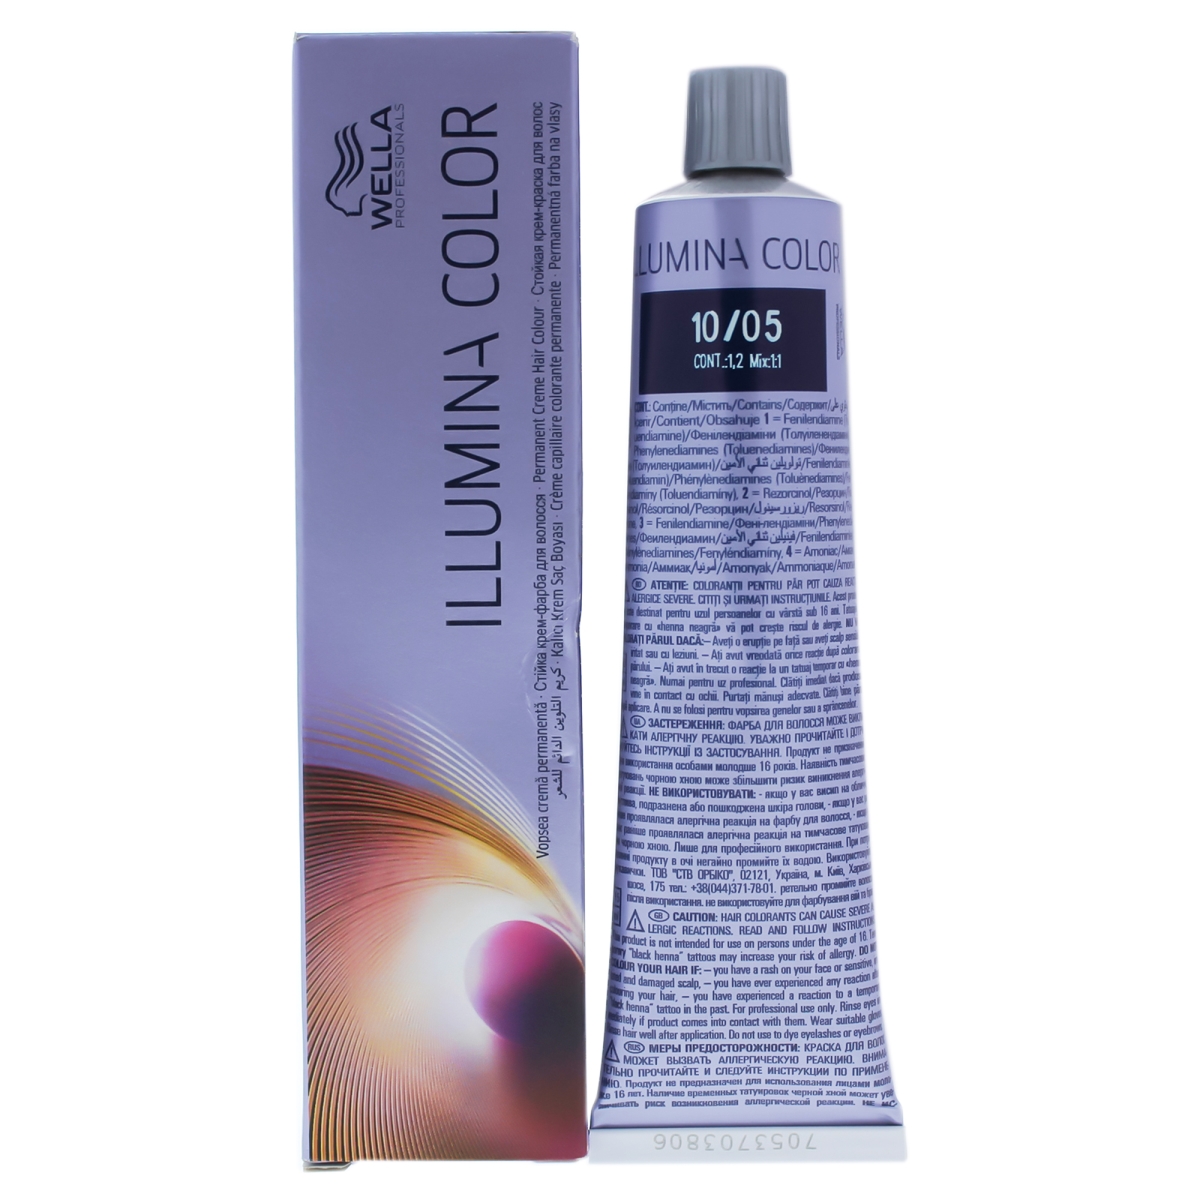 I0084362 Illumina Color Permanent Creme Hair Color For Unisex - 10-05 Lightest Natural Mahogany Blonde - 2 Oz